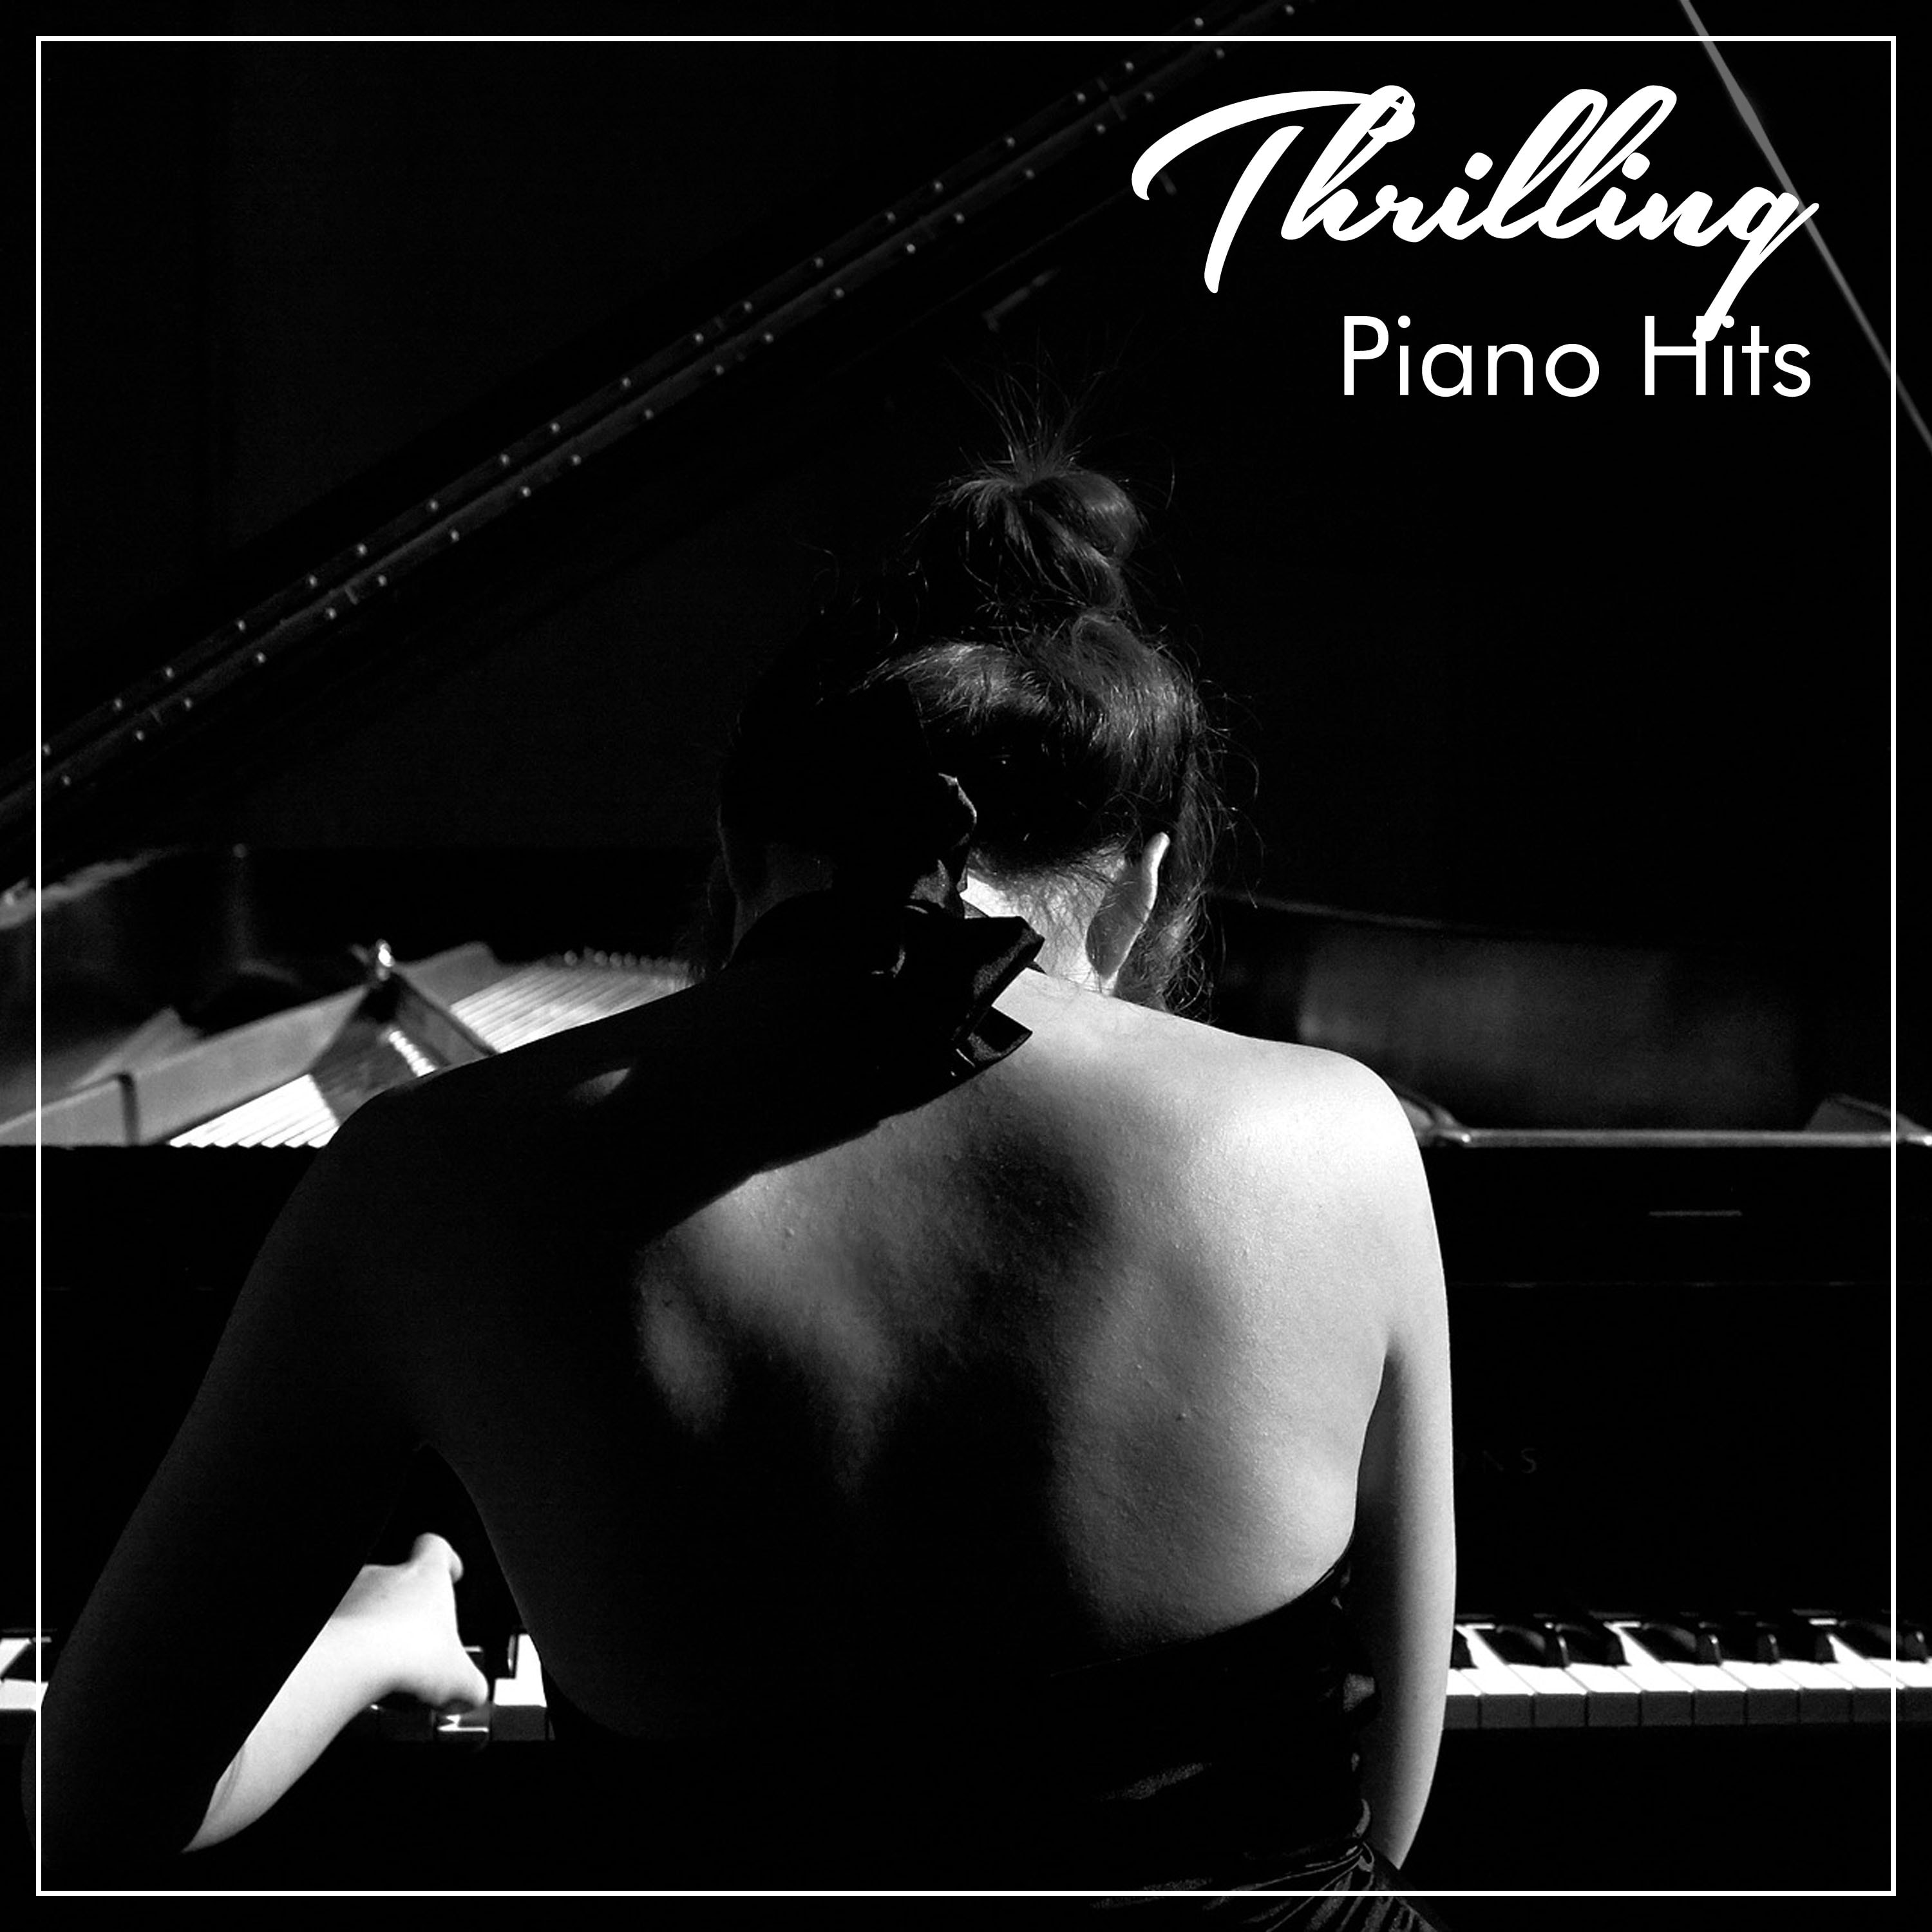 #14 Thrilling Piano Hits